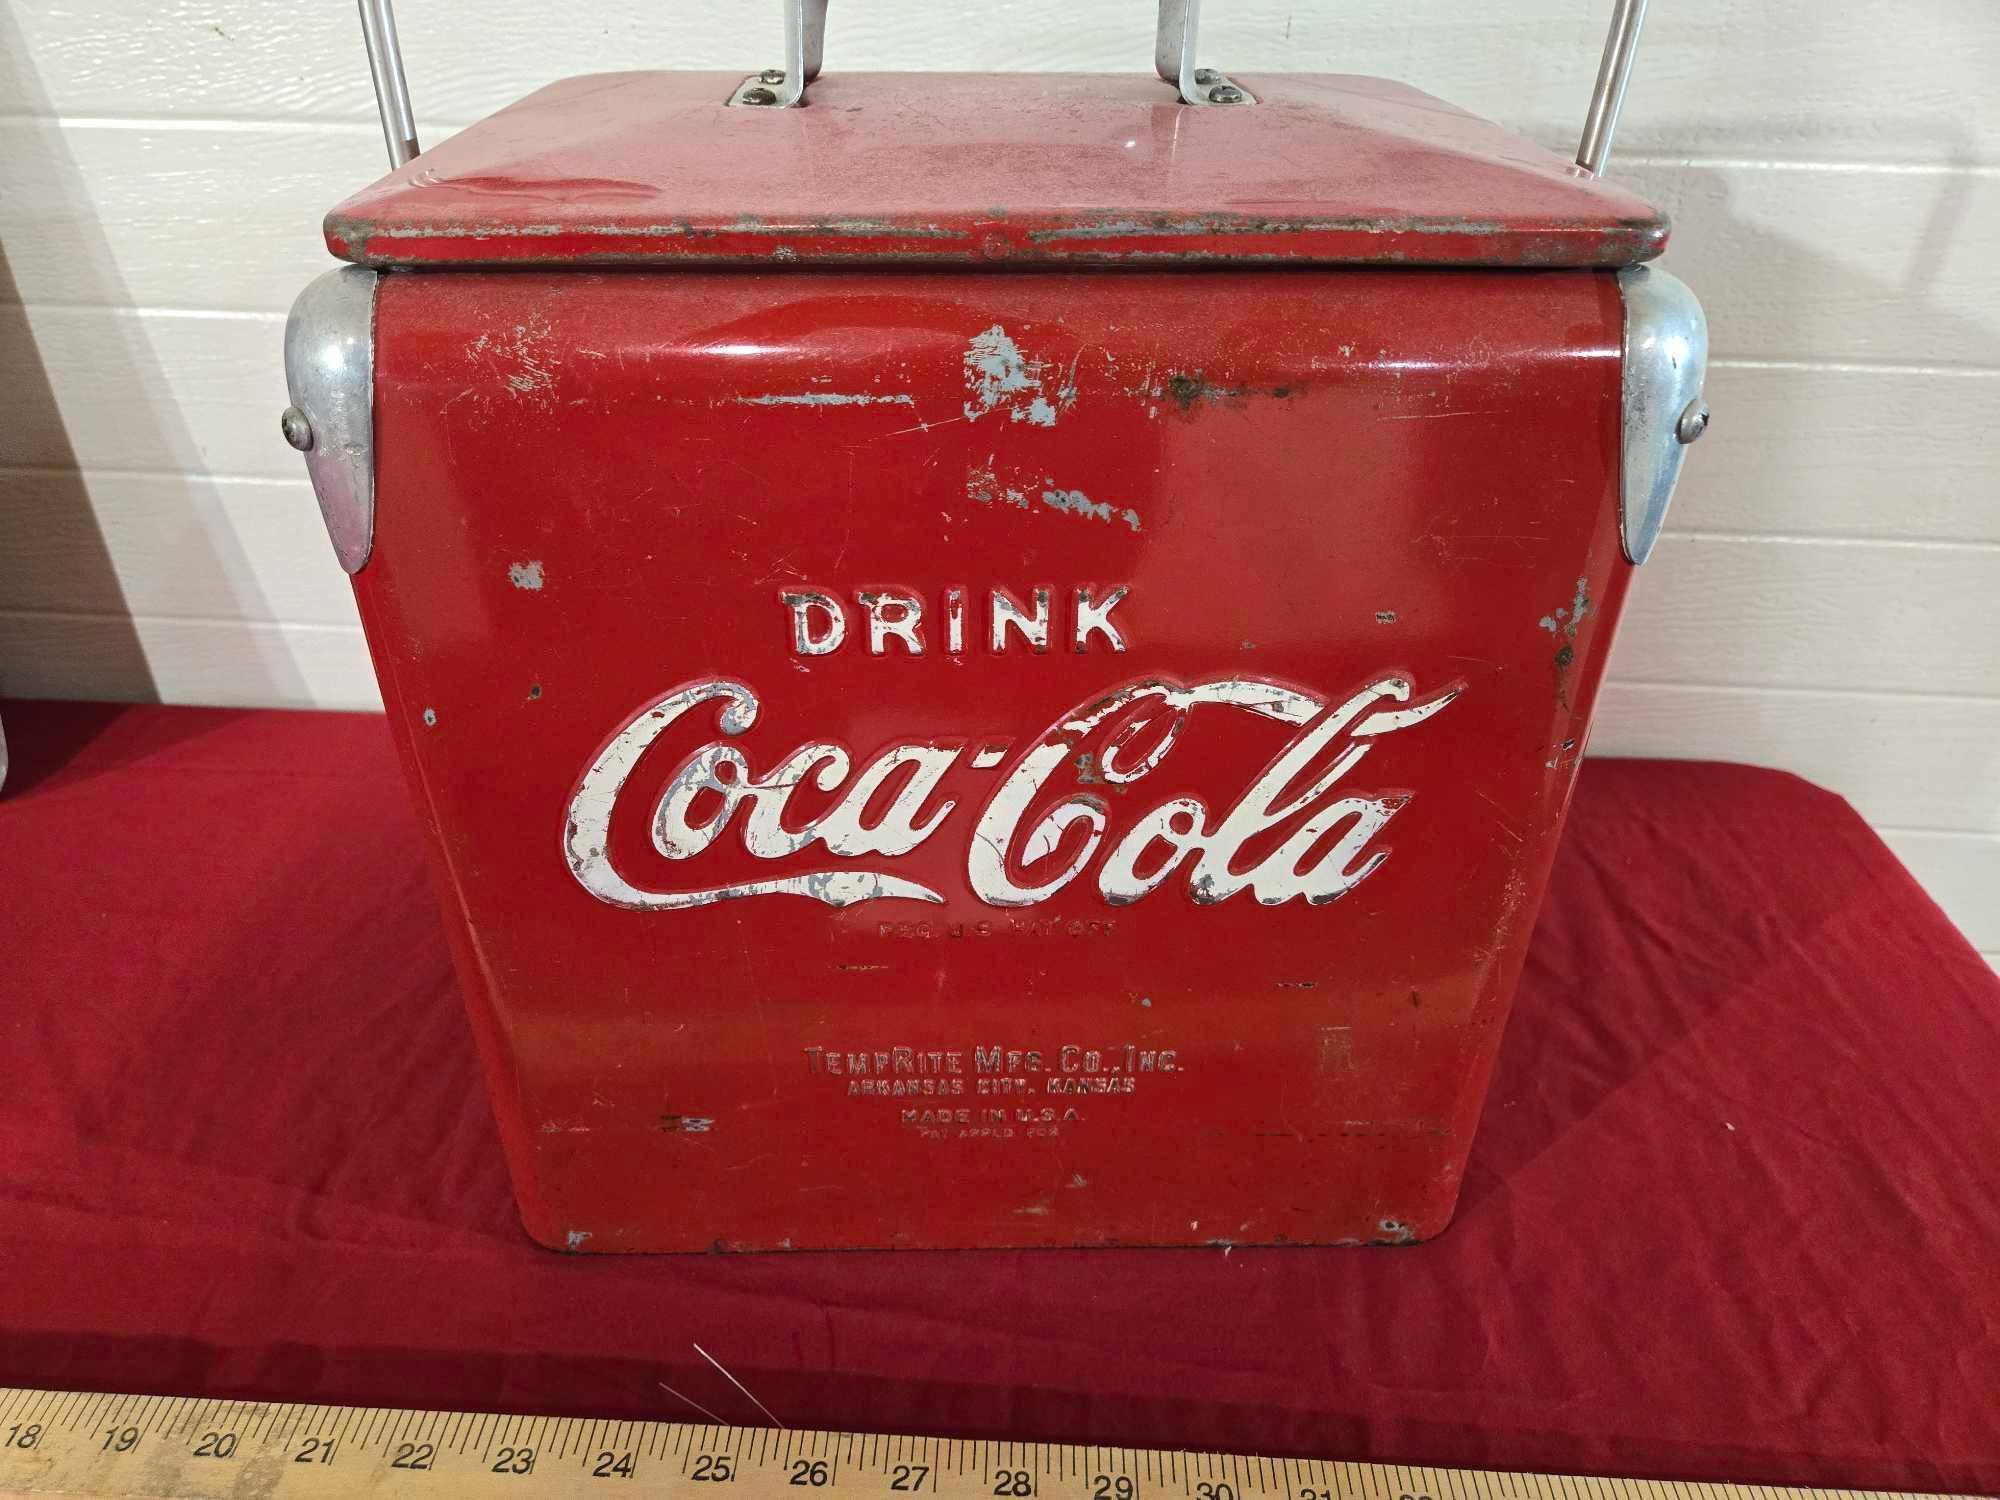 Drink Coca Cola Cooler